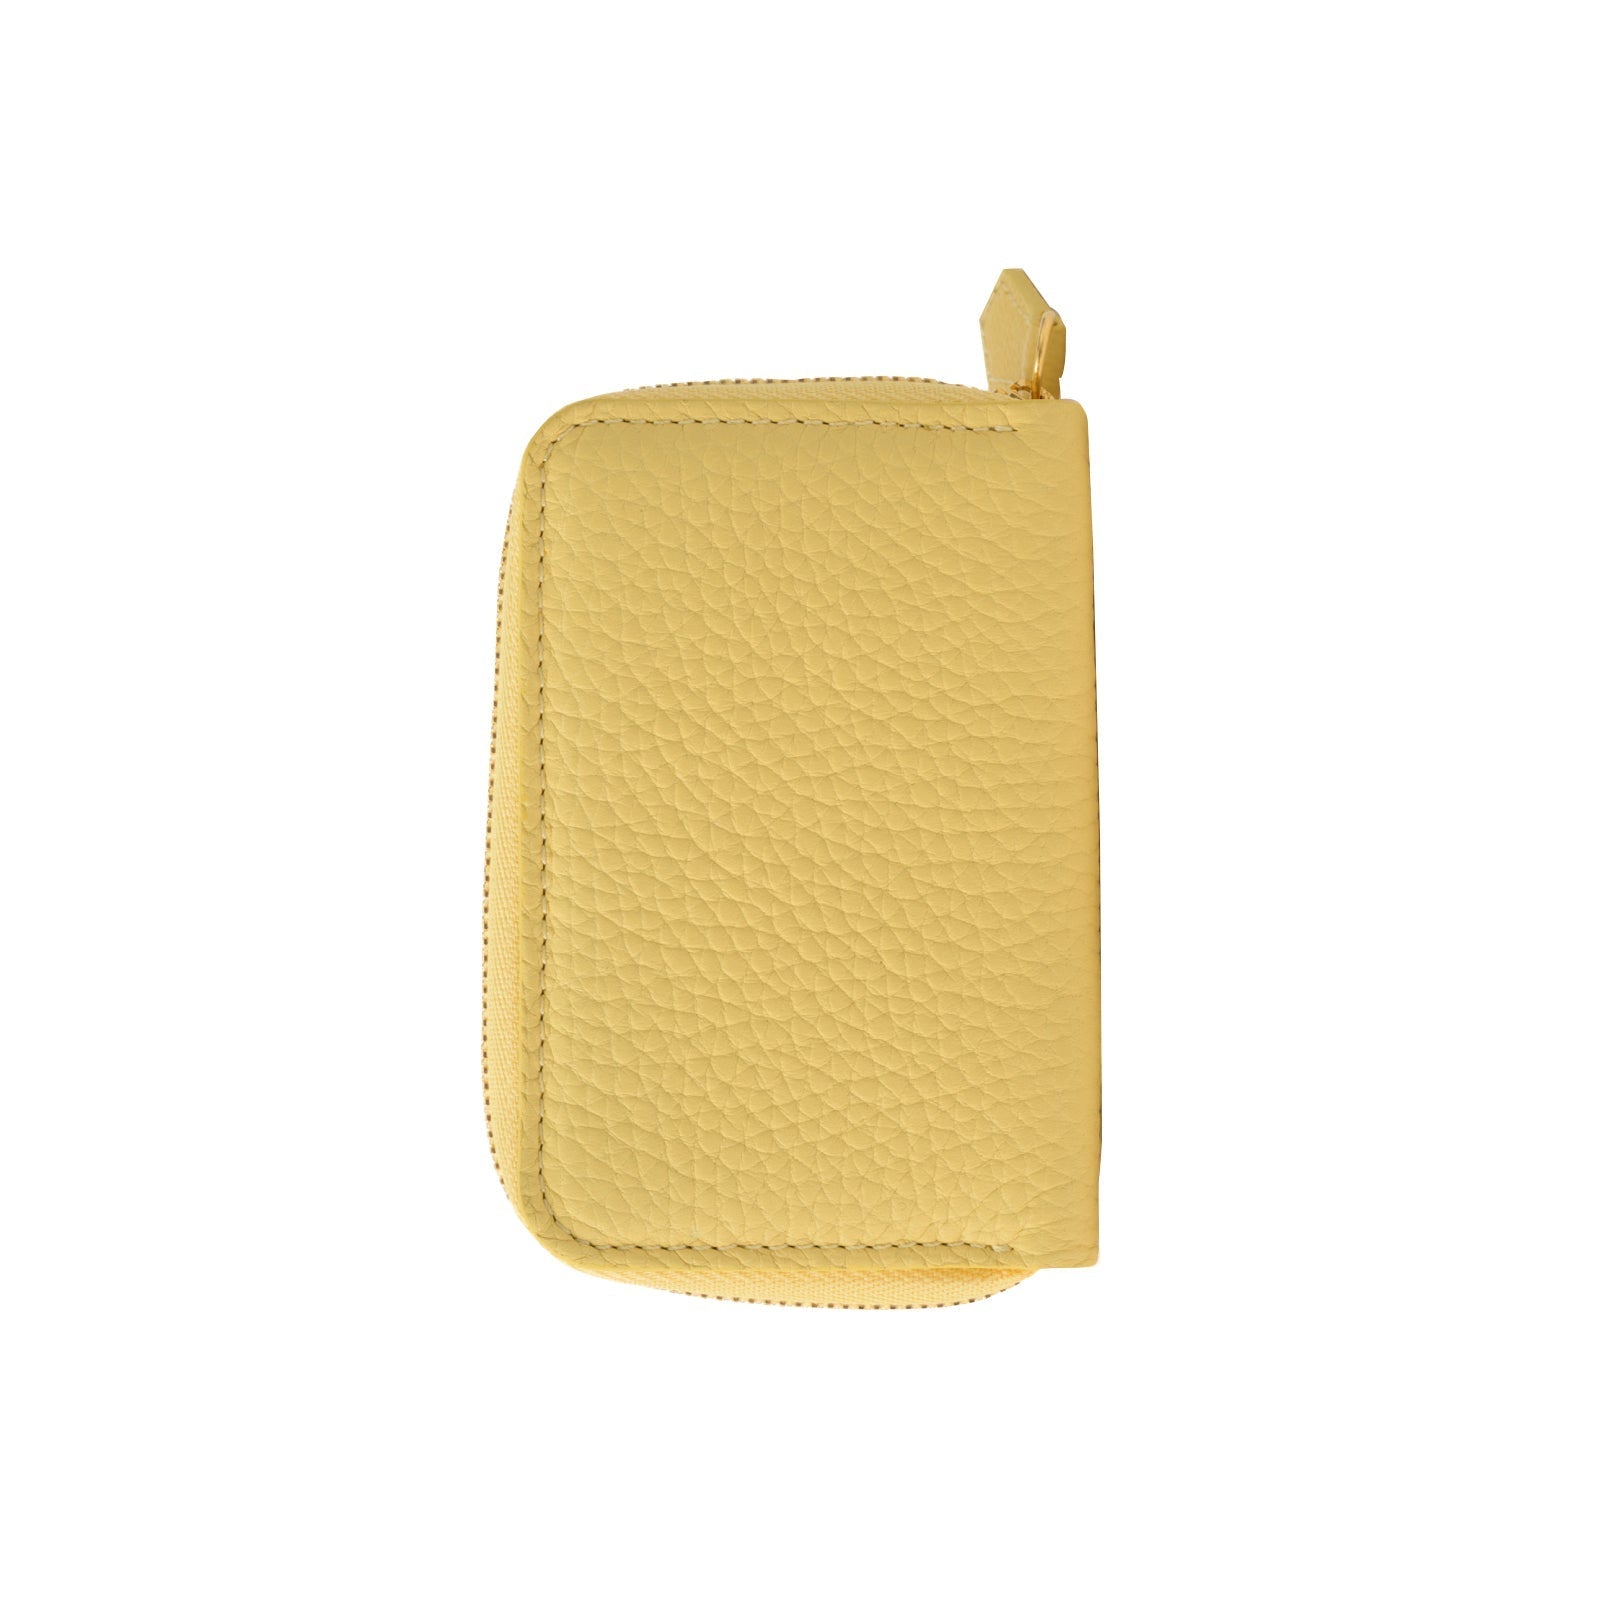 Round zipper 6 smart key case Taurillon Clemence